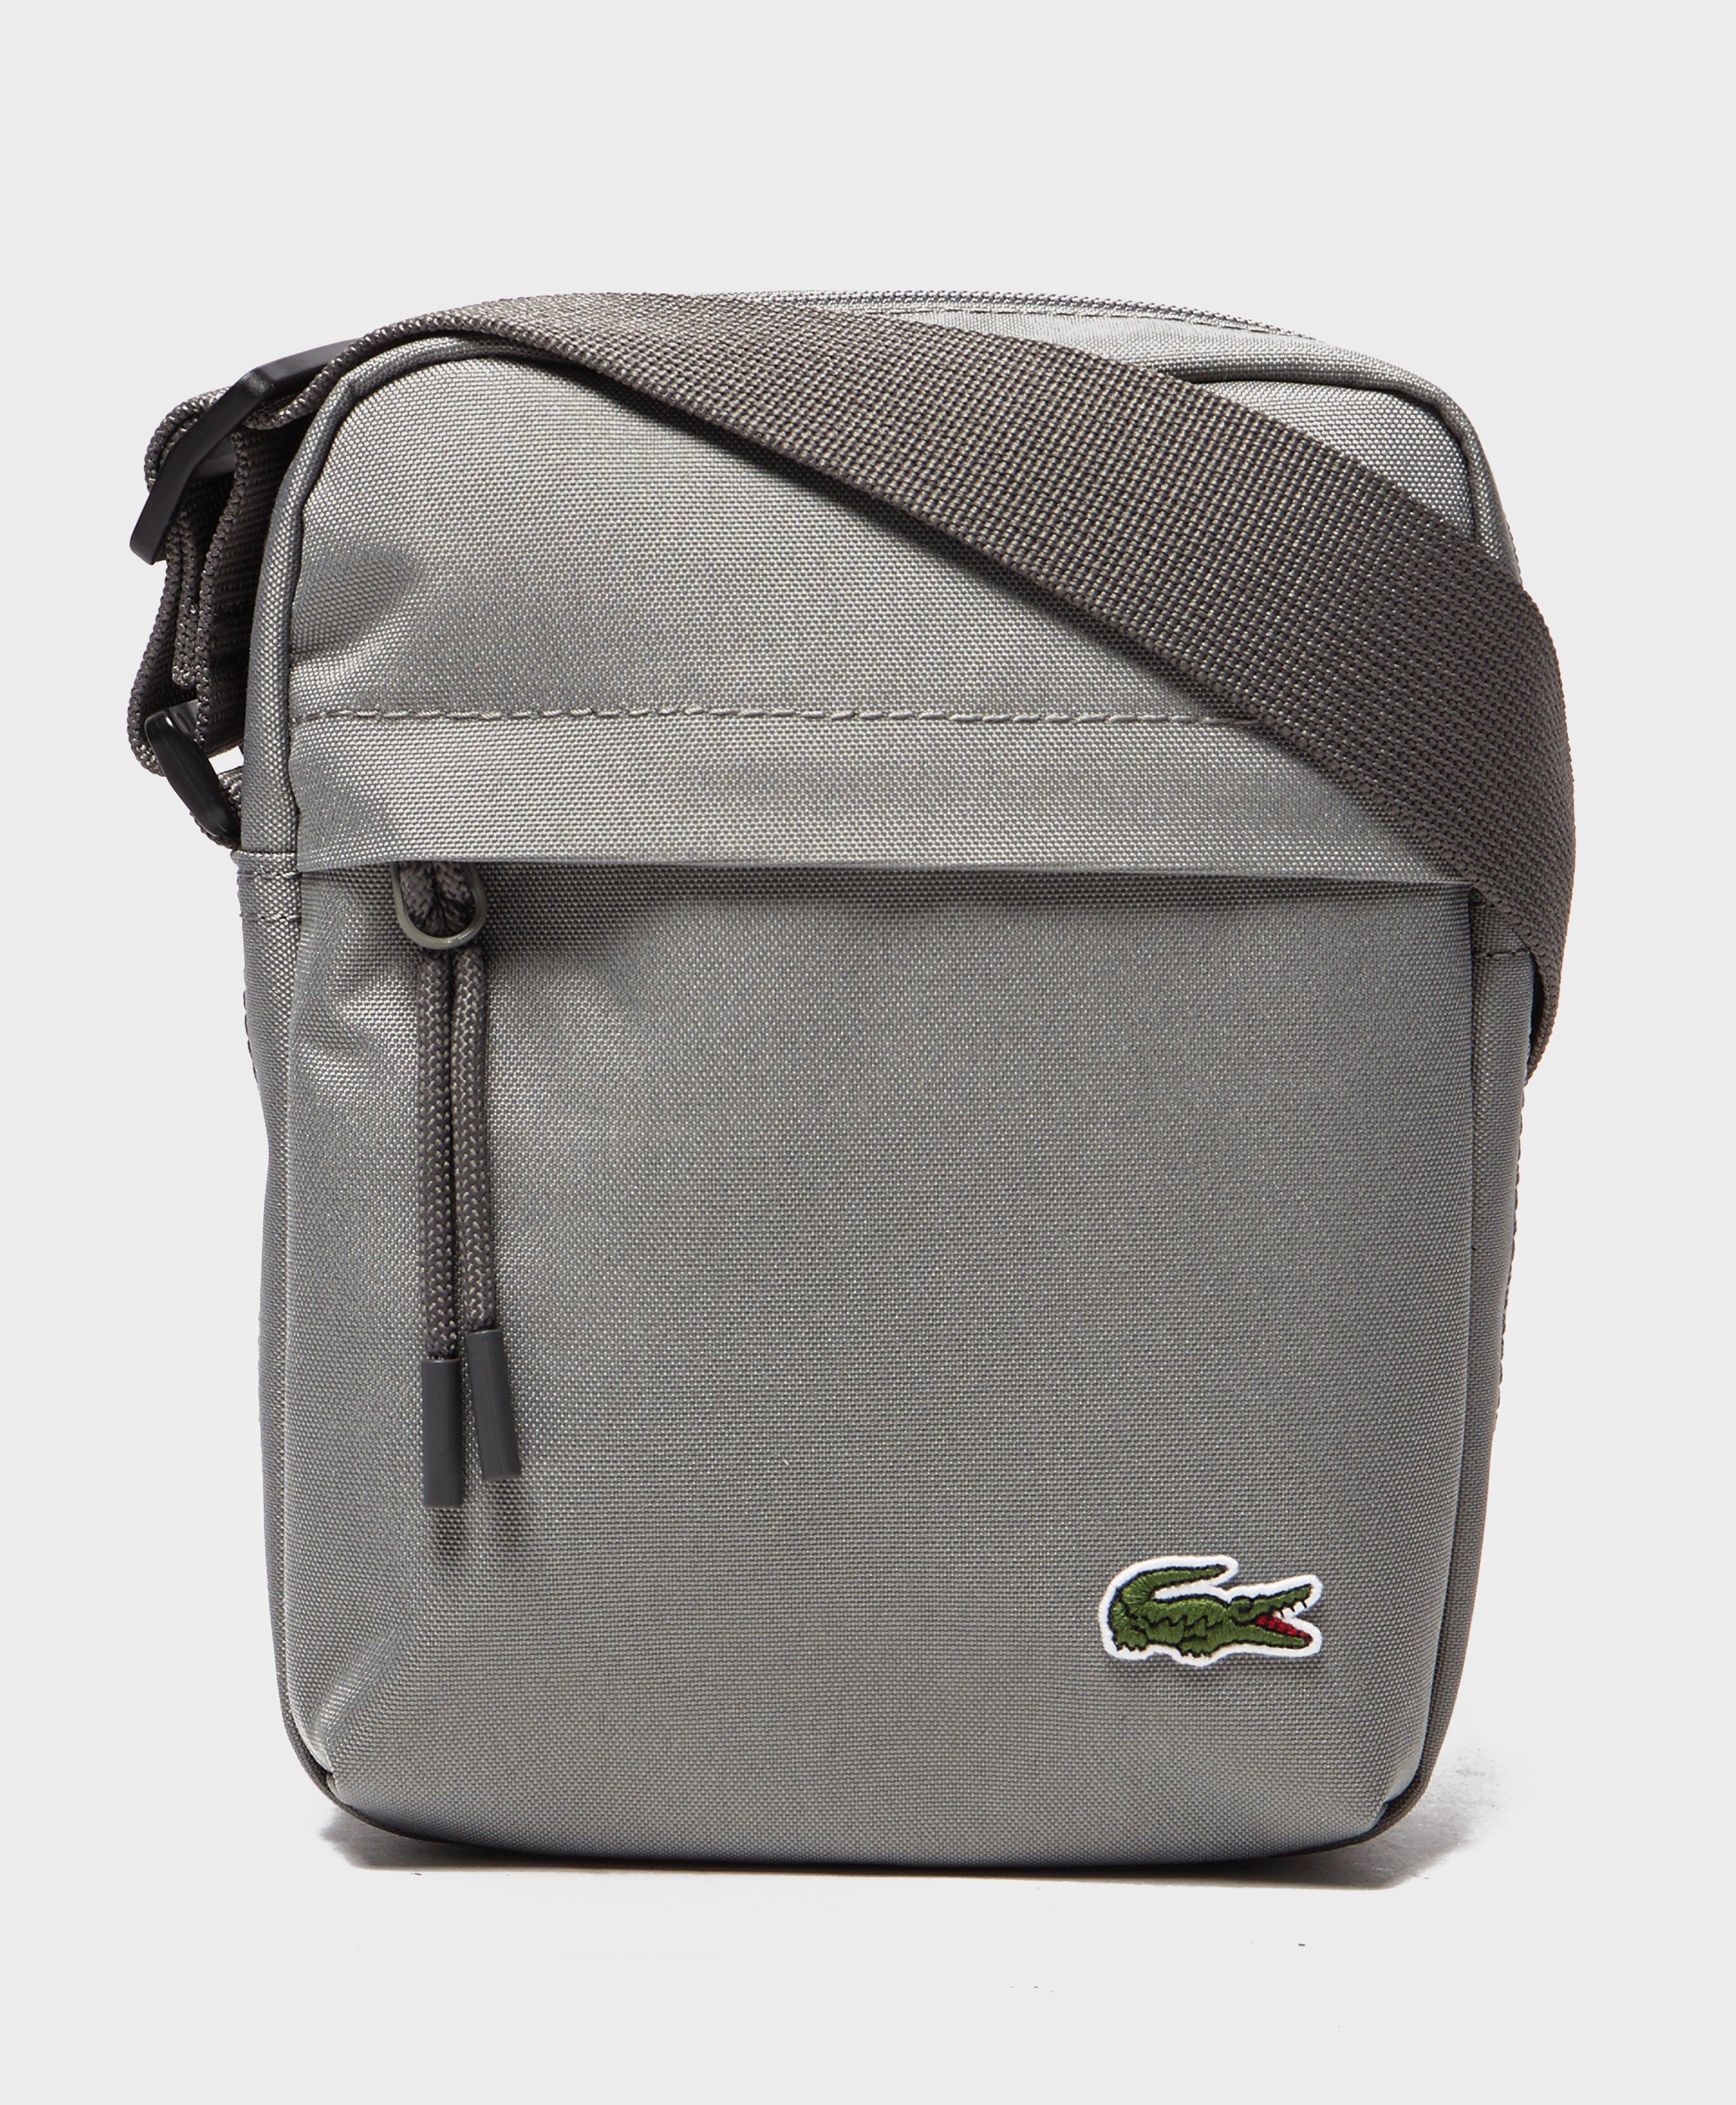 Lyst - Lacoste Mini Bag in Gray for Men